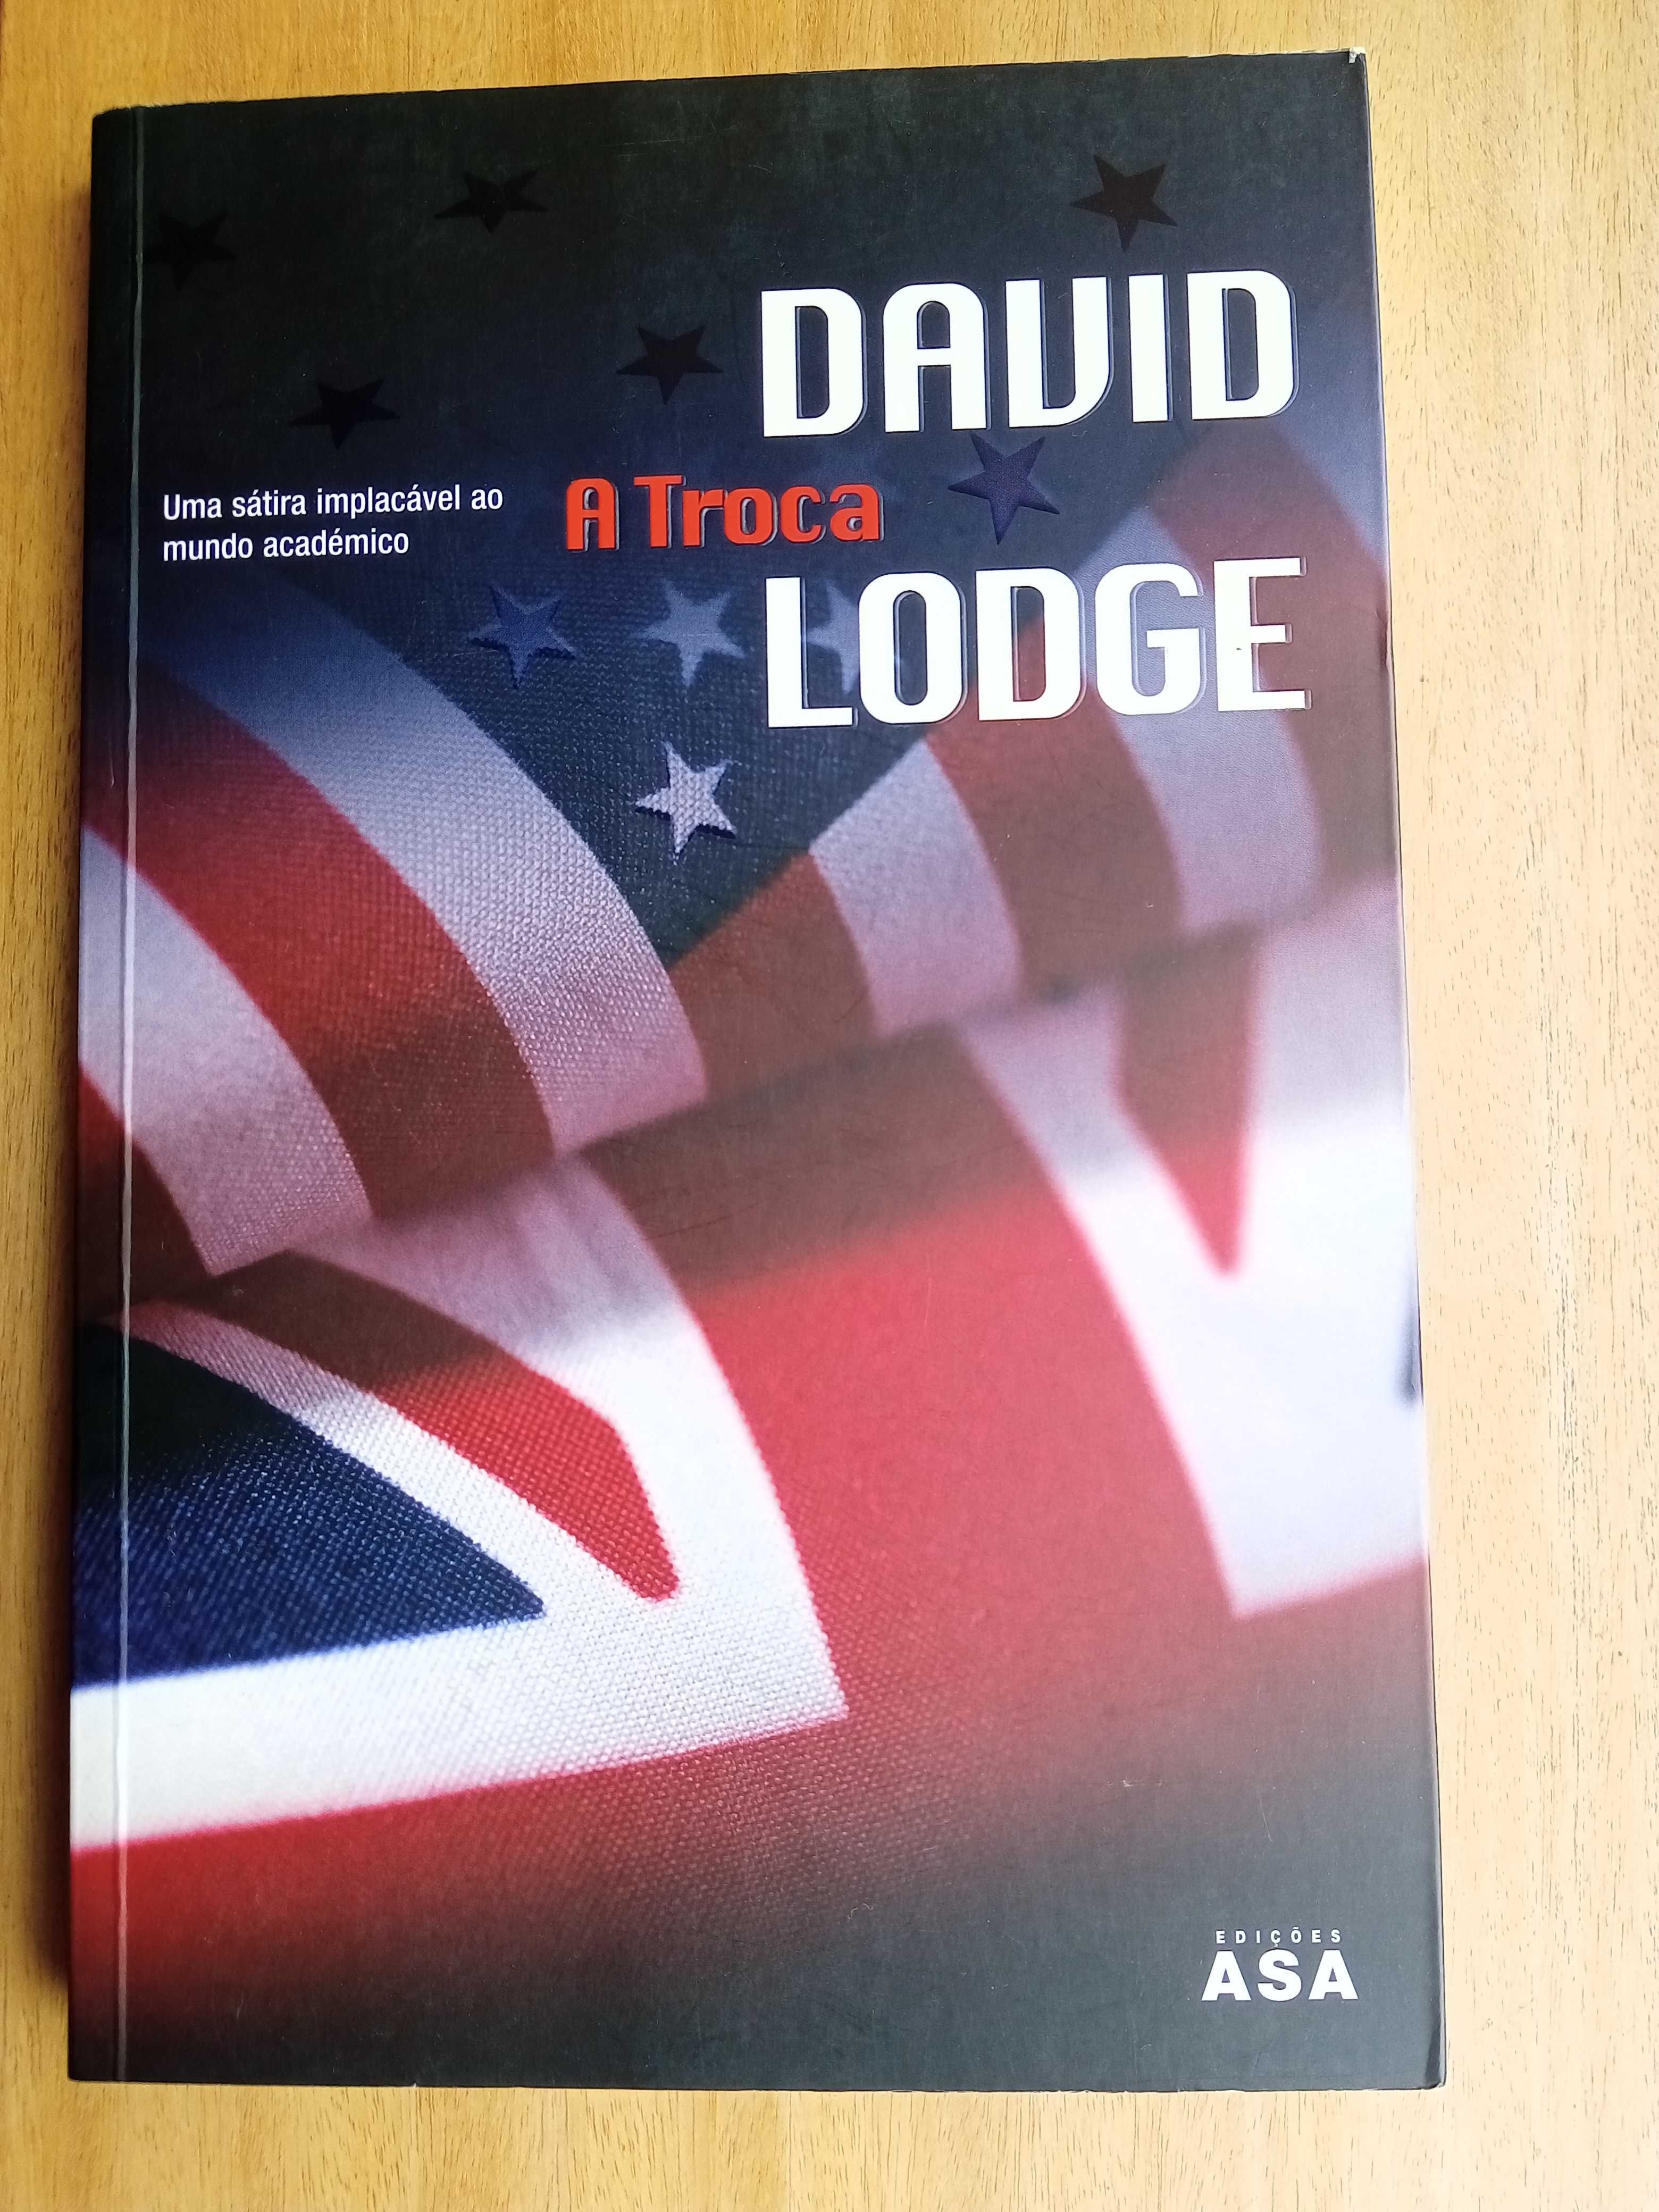 A troca, David Lodge